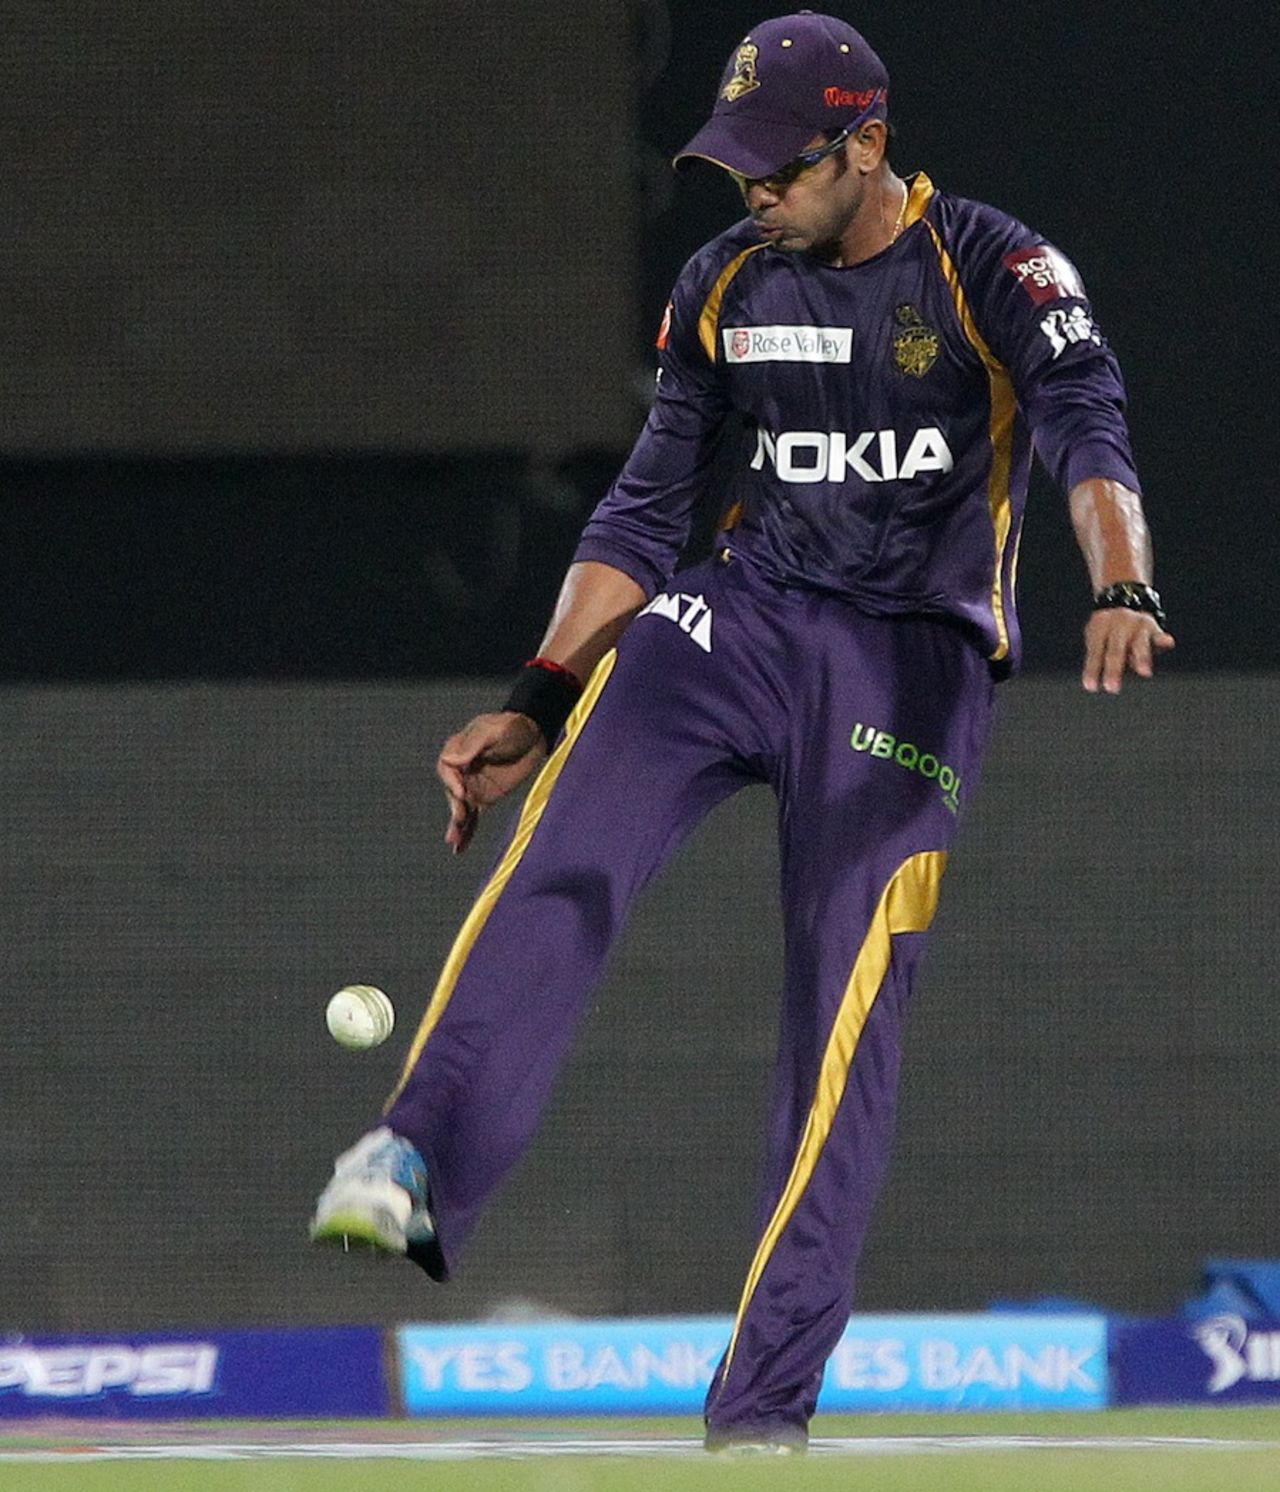 Manoj Tiwary kicks the ball after taking a catch, Kolkata Knight Riders v Sunrisers Hyderabad, IPL, Kolkata, April 14, 2013